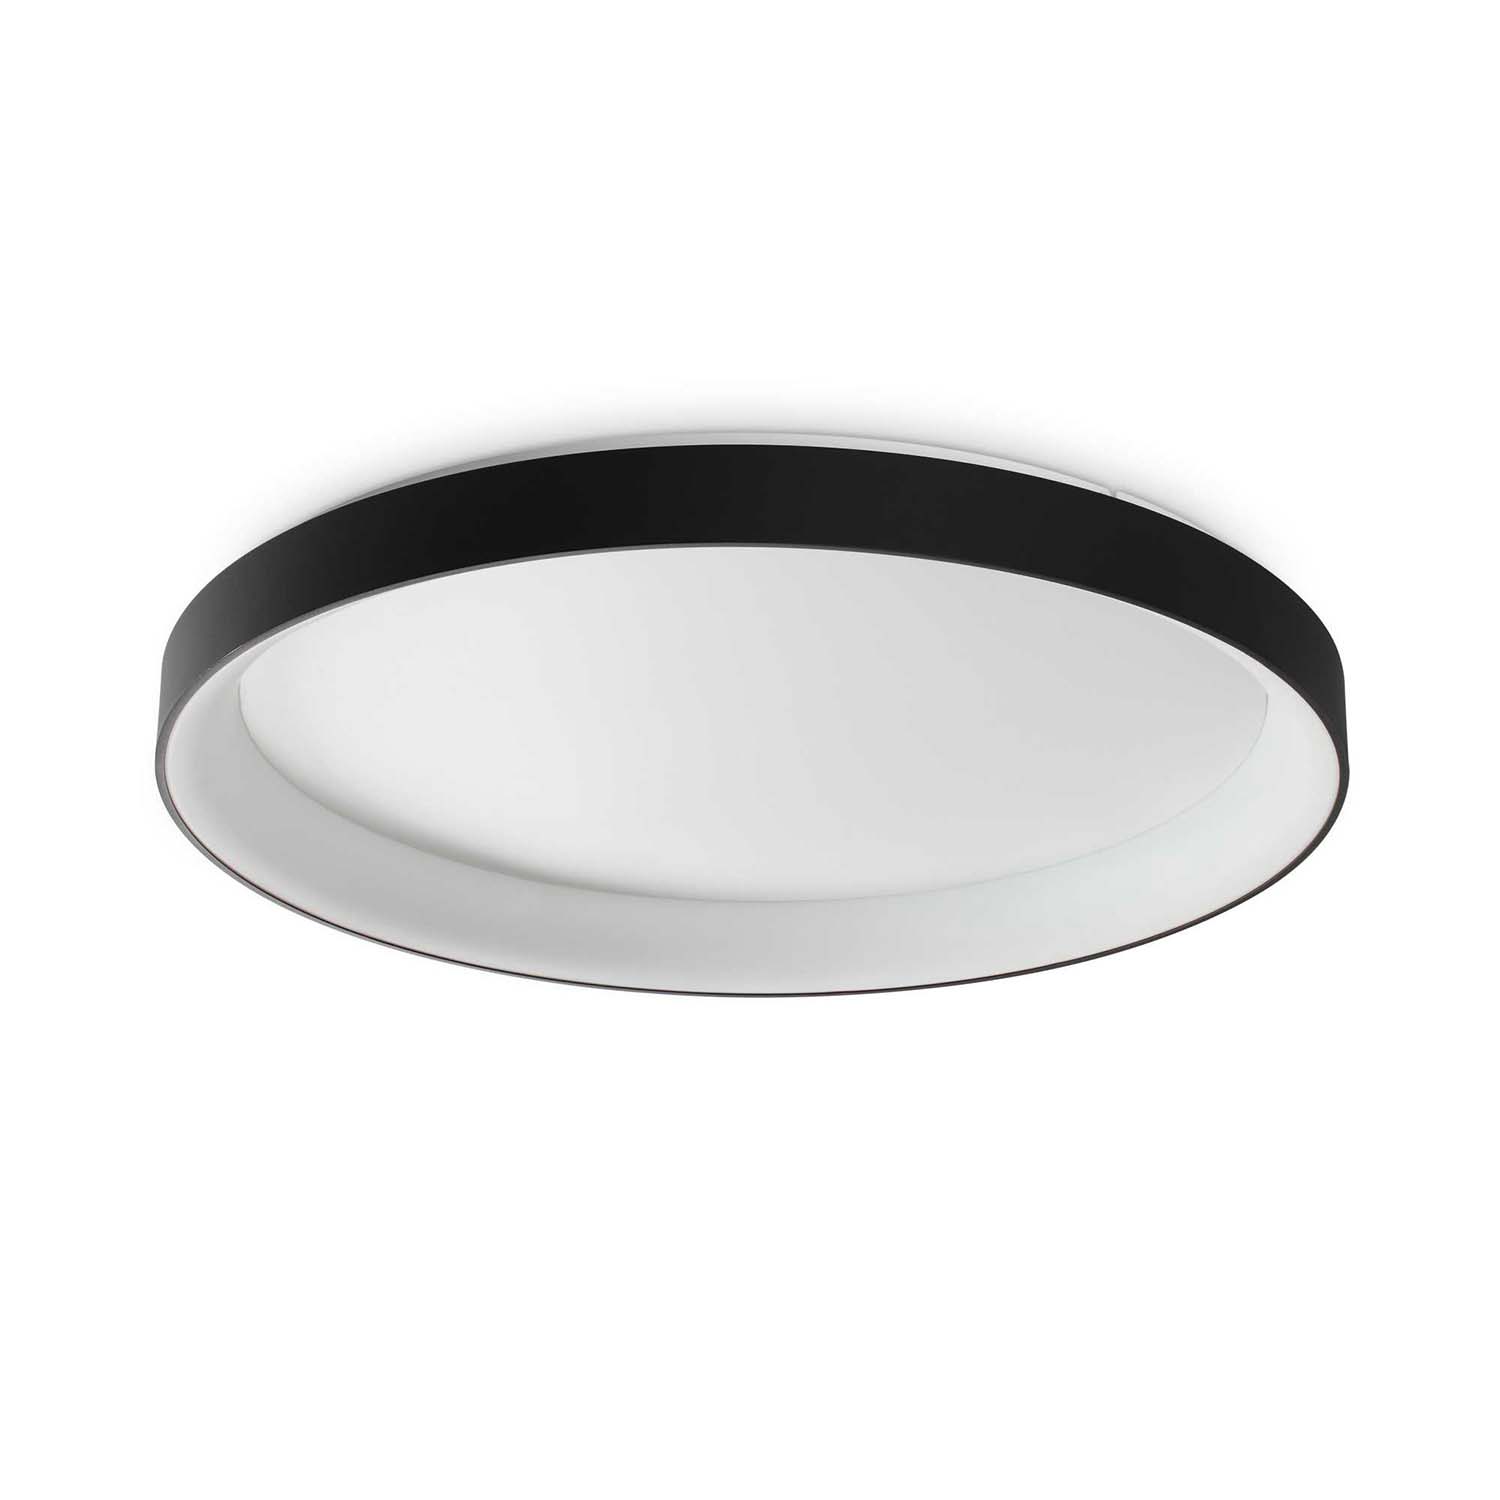 ZIGGY - Plafonnier rond design, blanc ou noir, grand diamètre